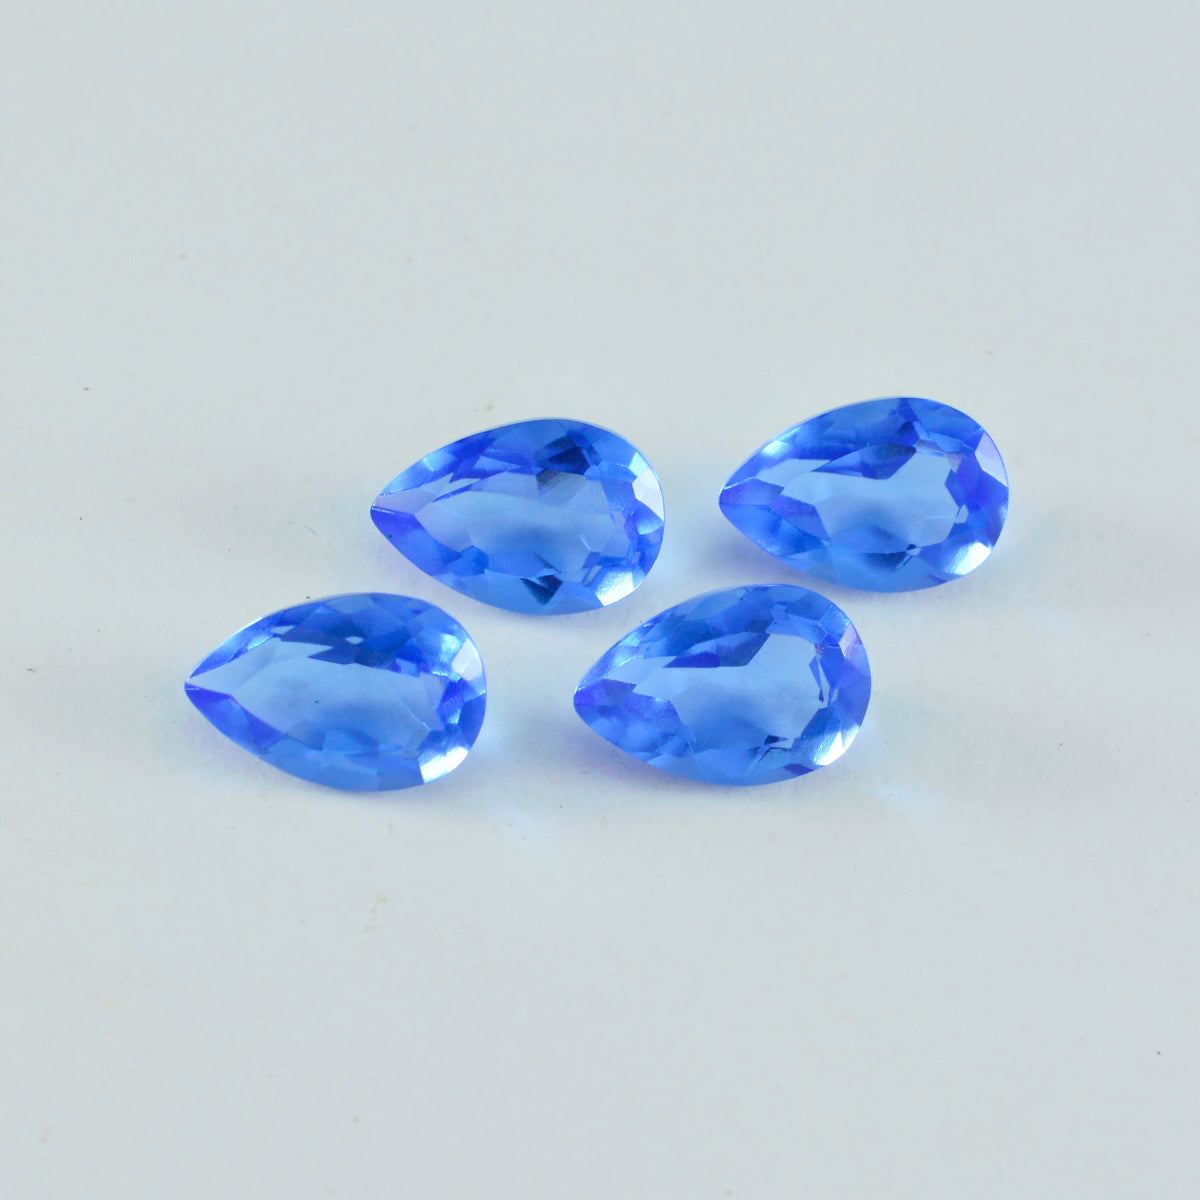 Riyogems 1PC Blue Sapphire CZ Faceted 8x12 mm Pear Shape astonishing Quality Loose Gem